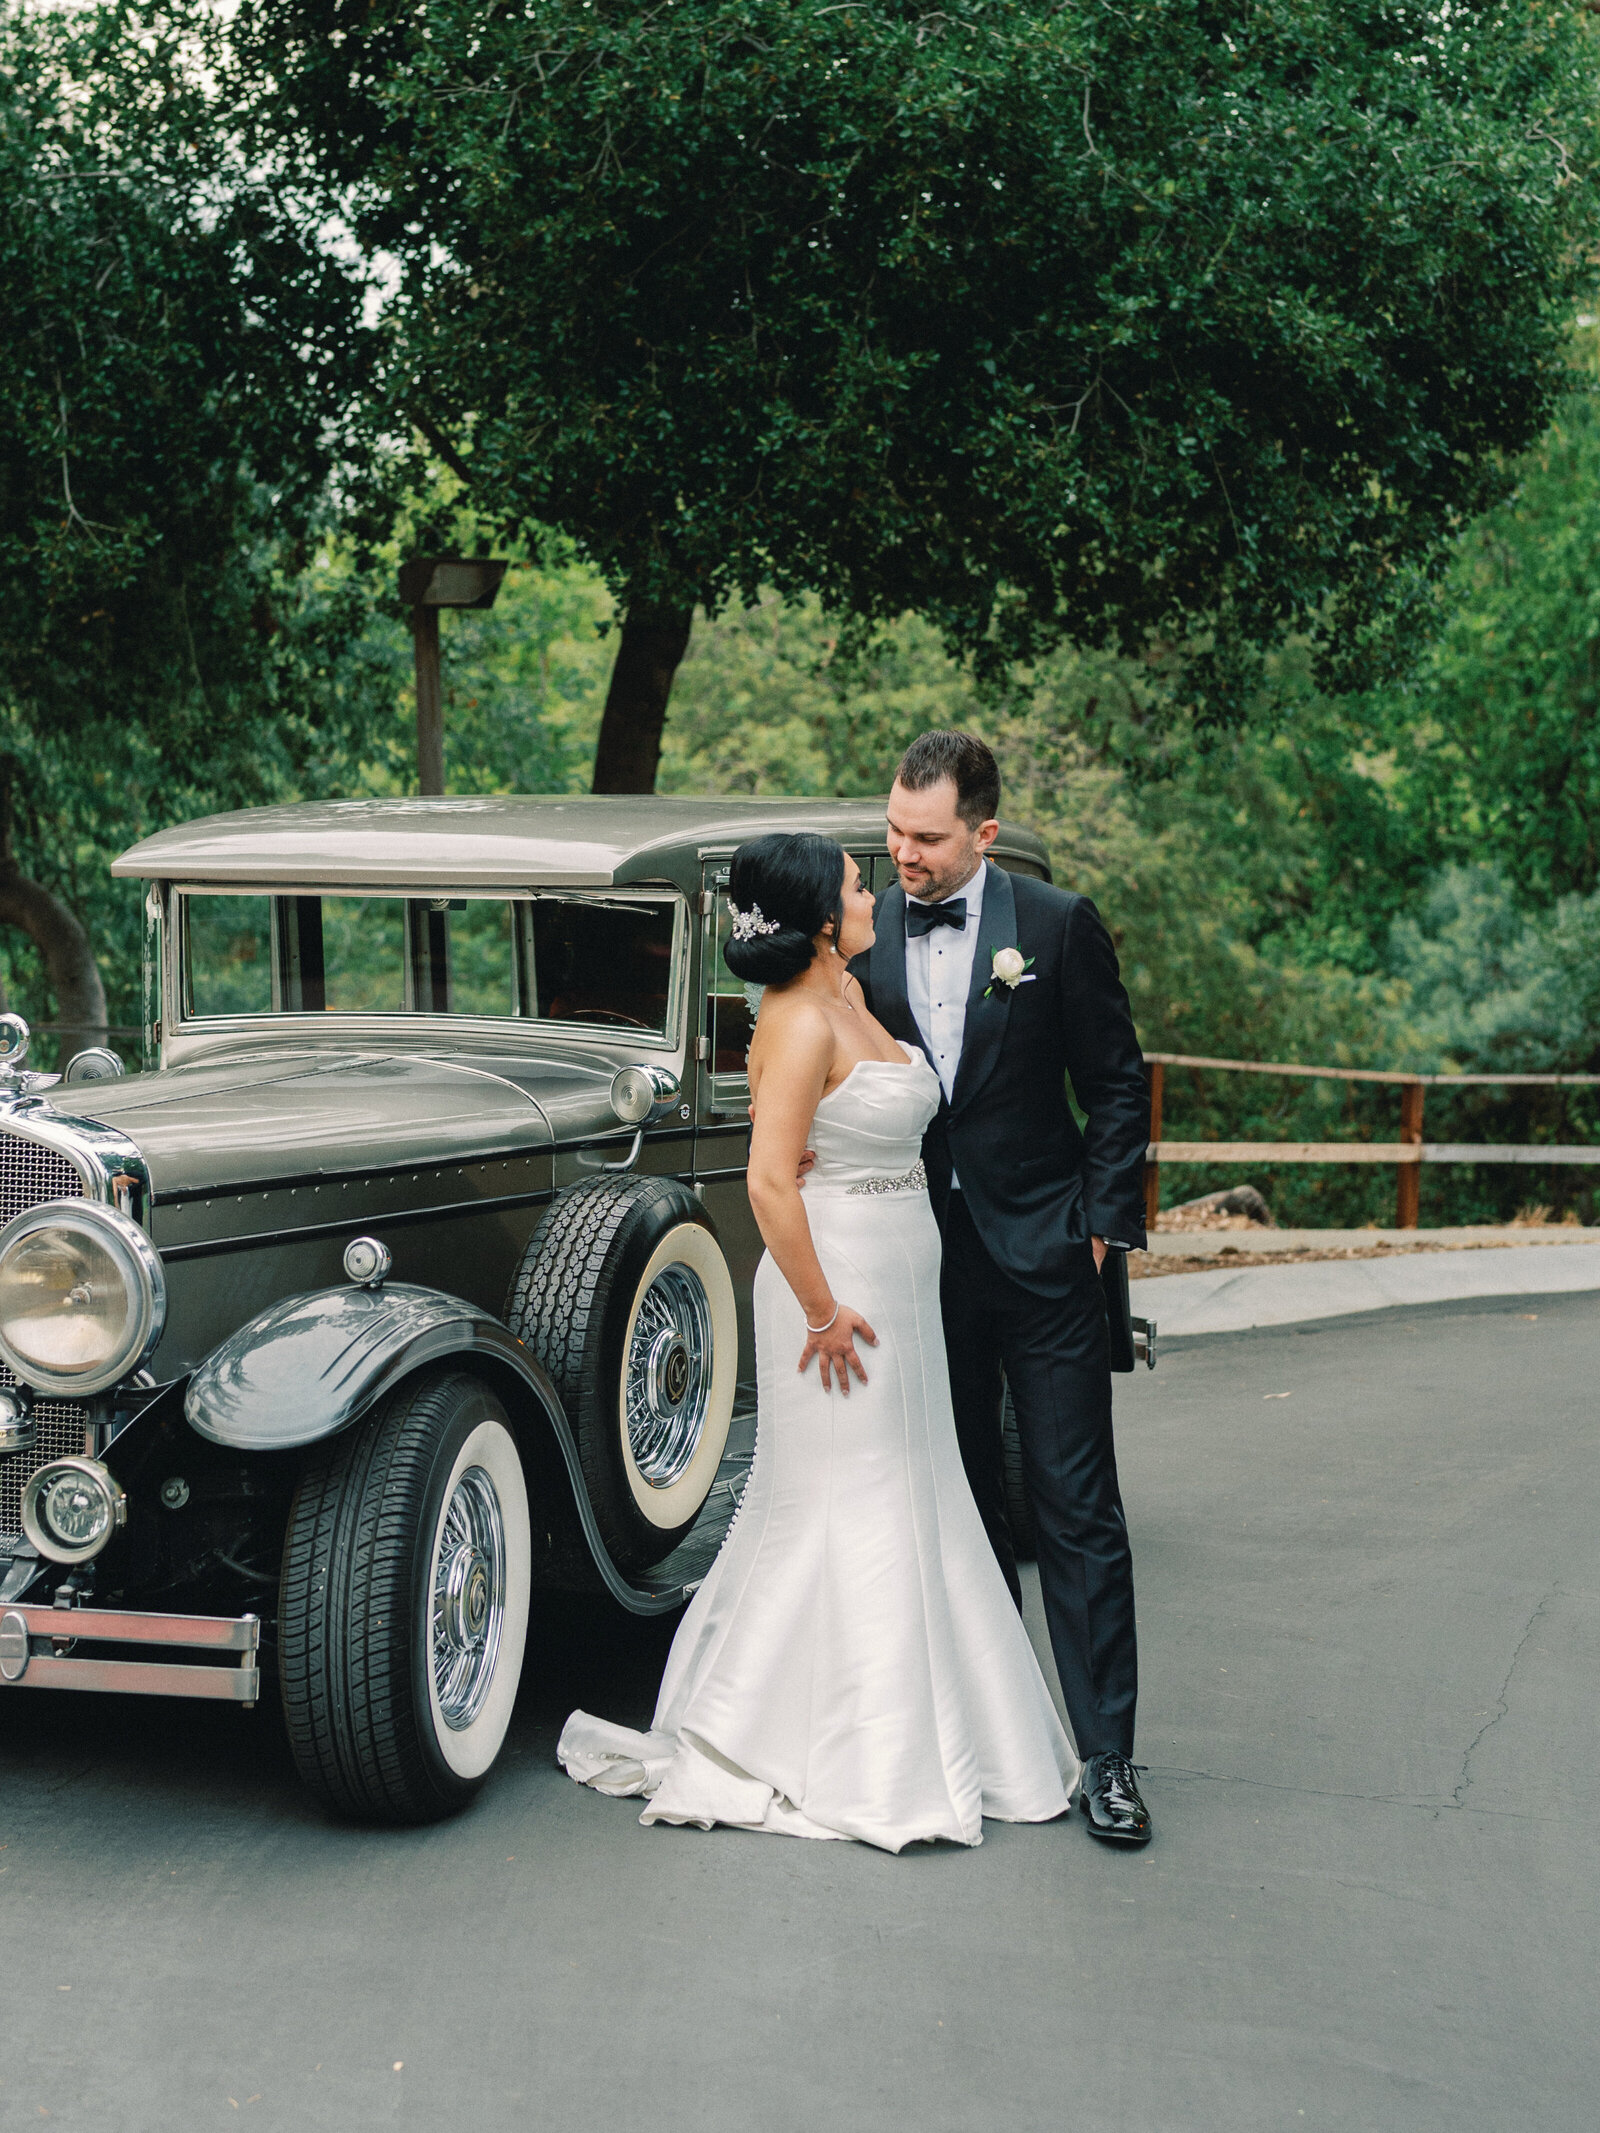 Ana & Andrei's Wedding - Villa Montalvo - Bay Area Wedding Florist (895)